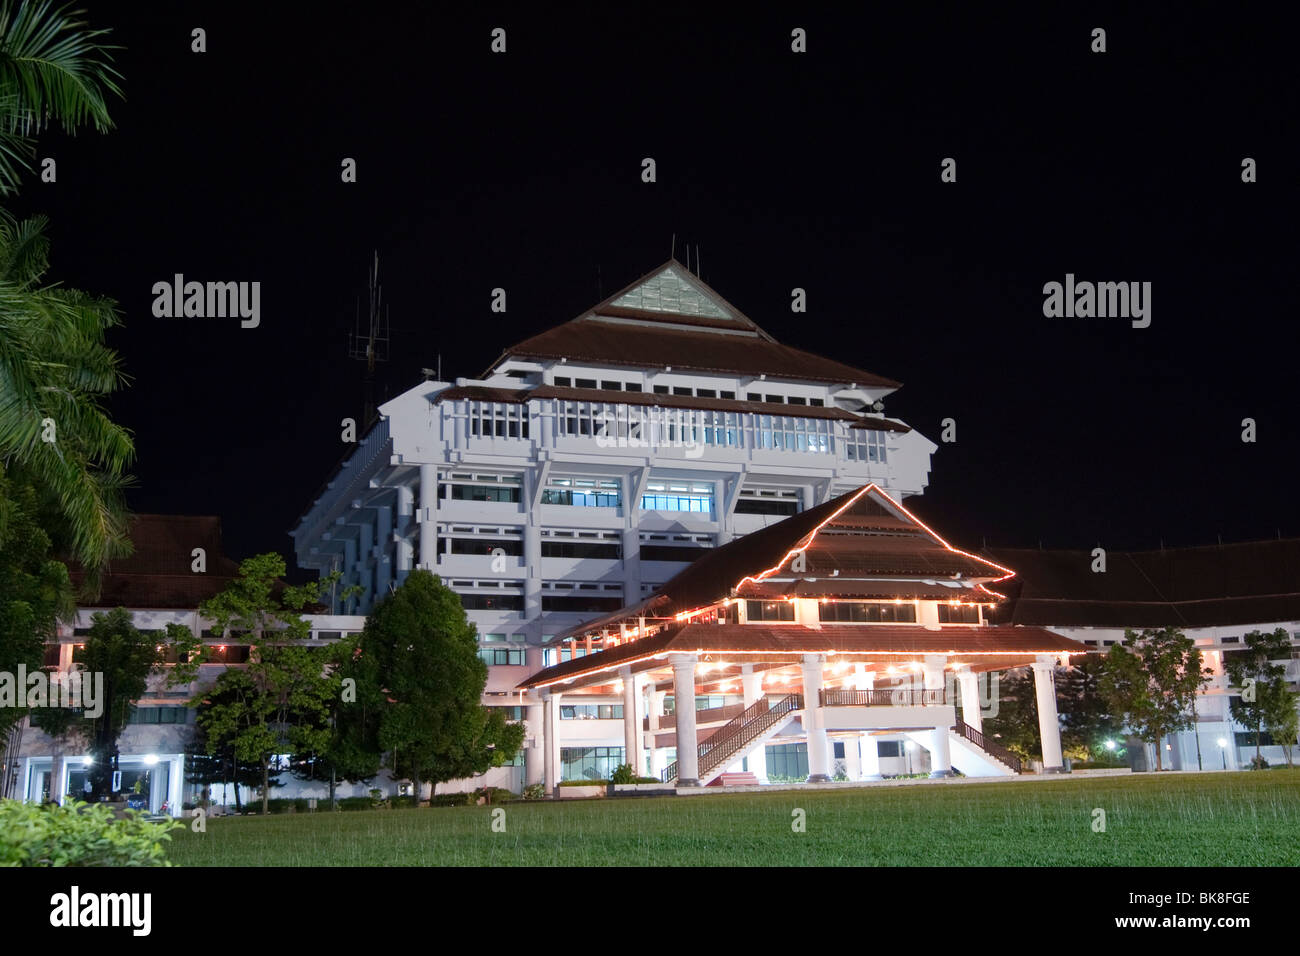 Governor's house at night, Manado, Sulawesi, Indonesia Stock Photo